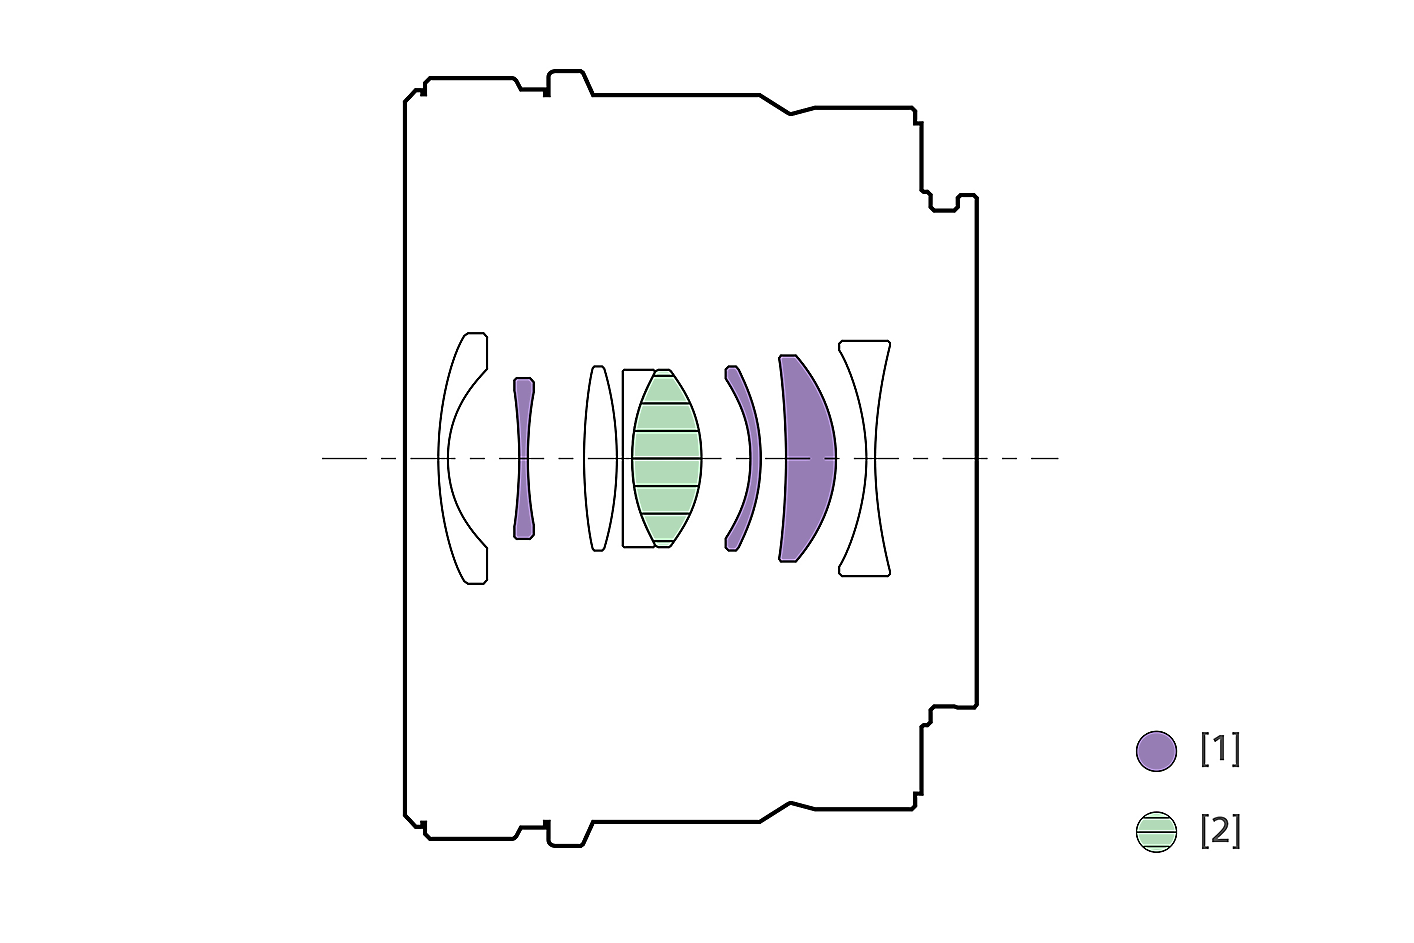 Illustration of lens configuration